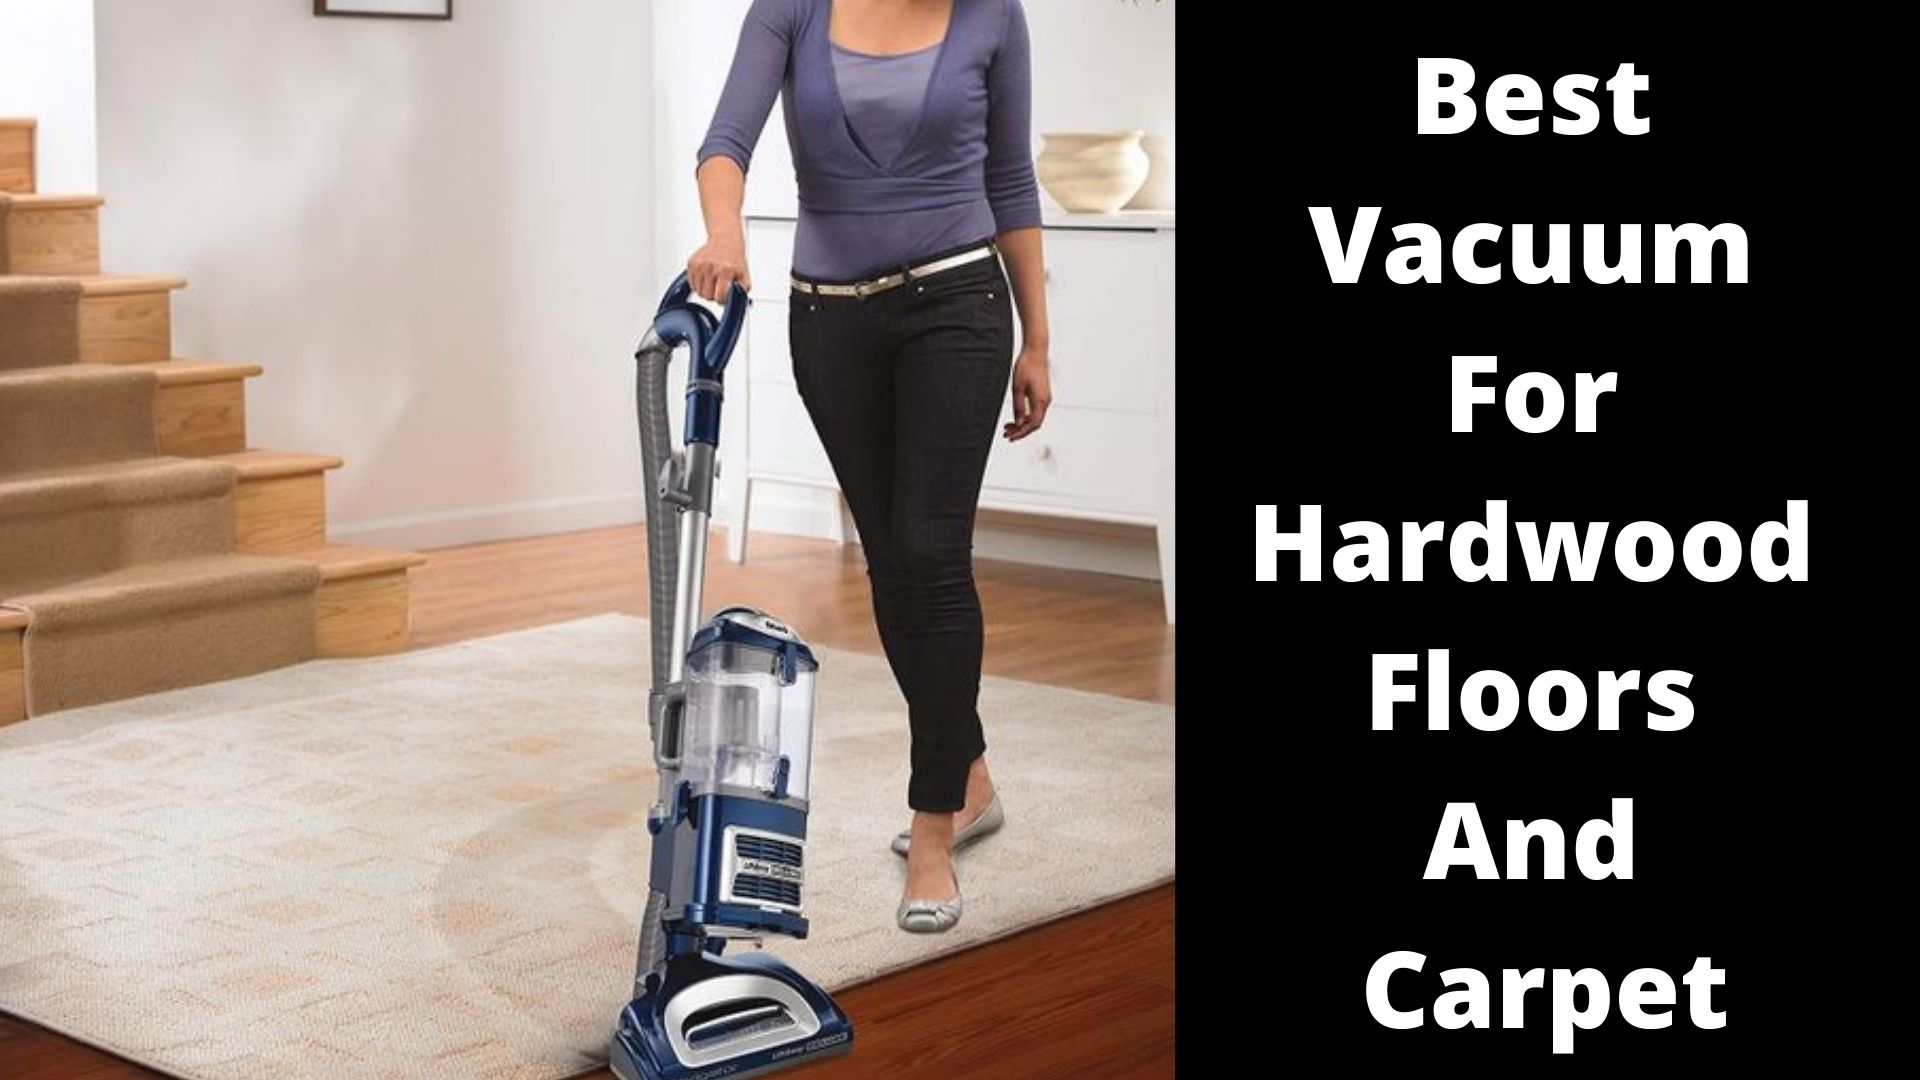 Best Vacuum For Hardwood Floors And Carpet